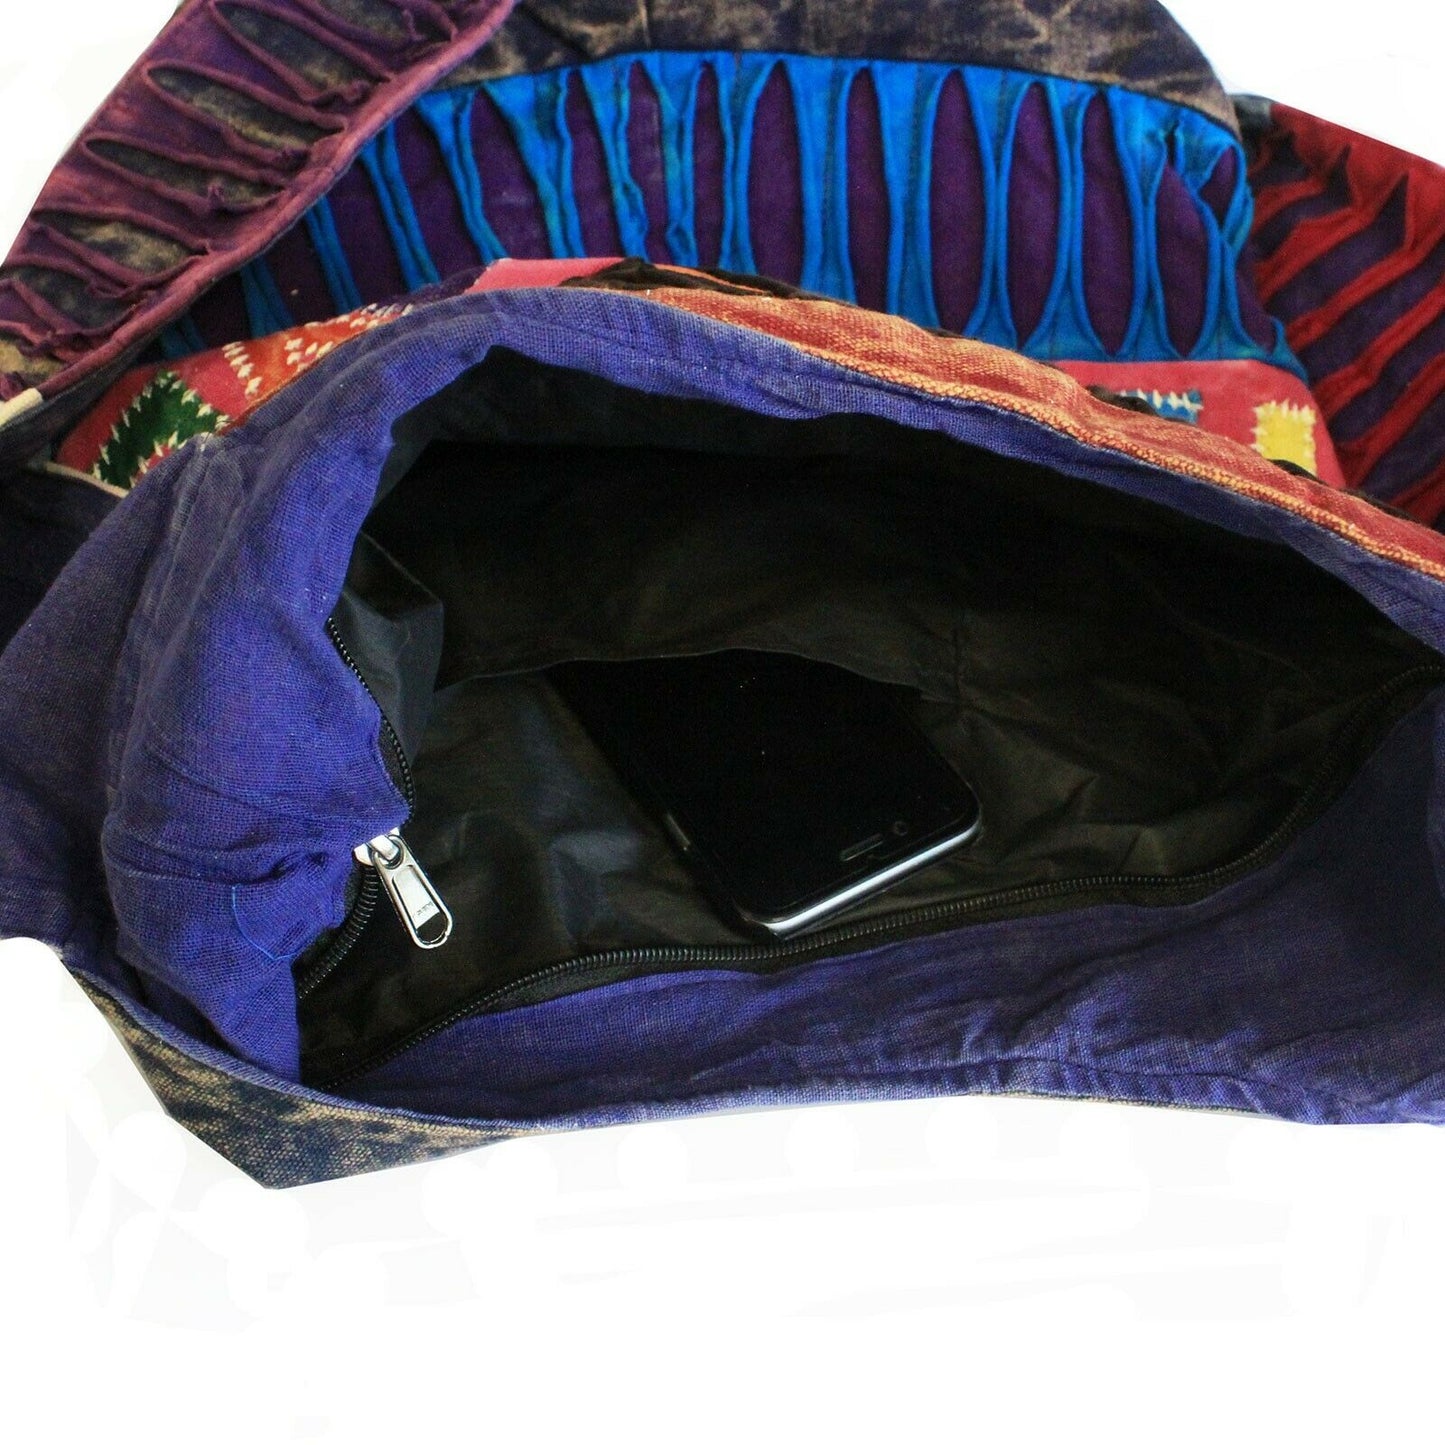 NEW bOHO/FESTI/HIPPY Patchwork Bags-PEACE LOVE shoulder bag/sling bag 34 X 36CM. New